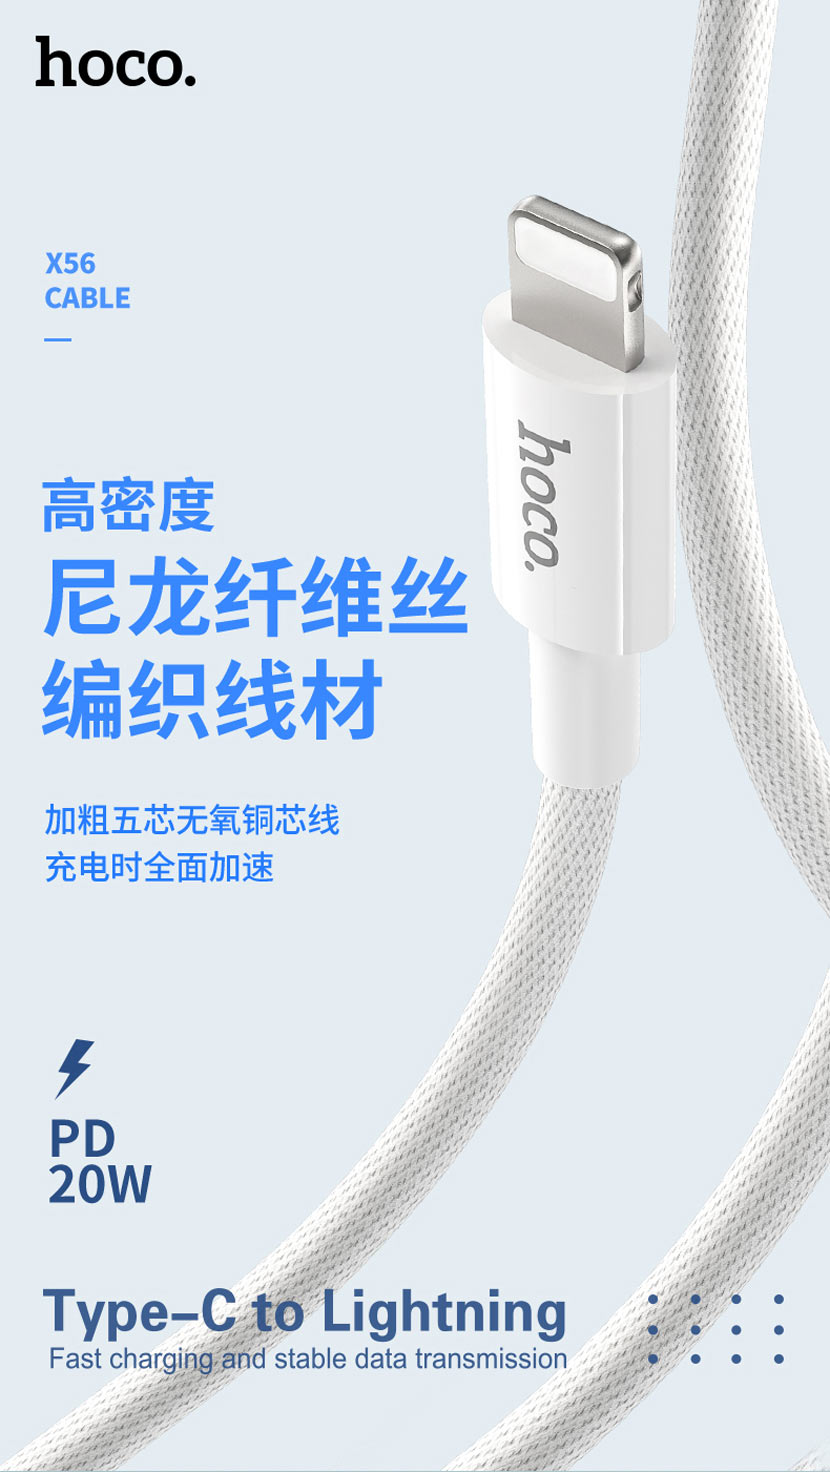 hoco news x56 new original pd charging data cable lightning braid cn